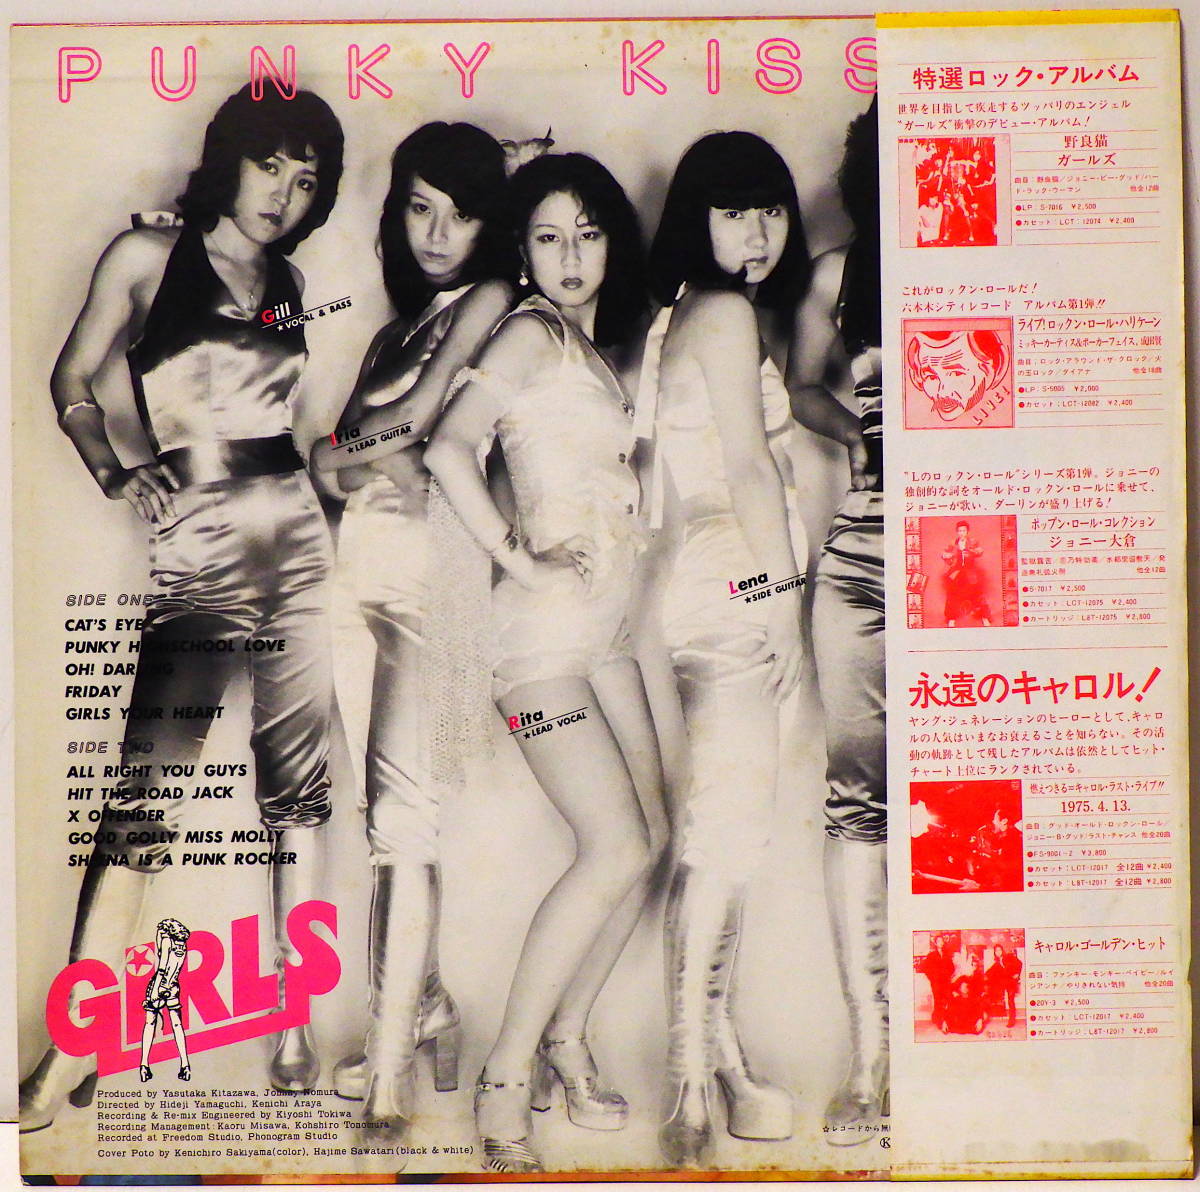 RARE ! 見本盤 ガールズ パンキーキッス PROMO ! GIRLS PUNKY KISS NIPPON PHONOGRAM S-7027 WITH OBI_画像6